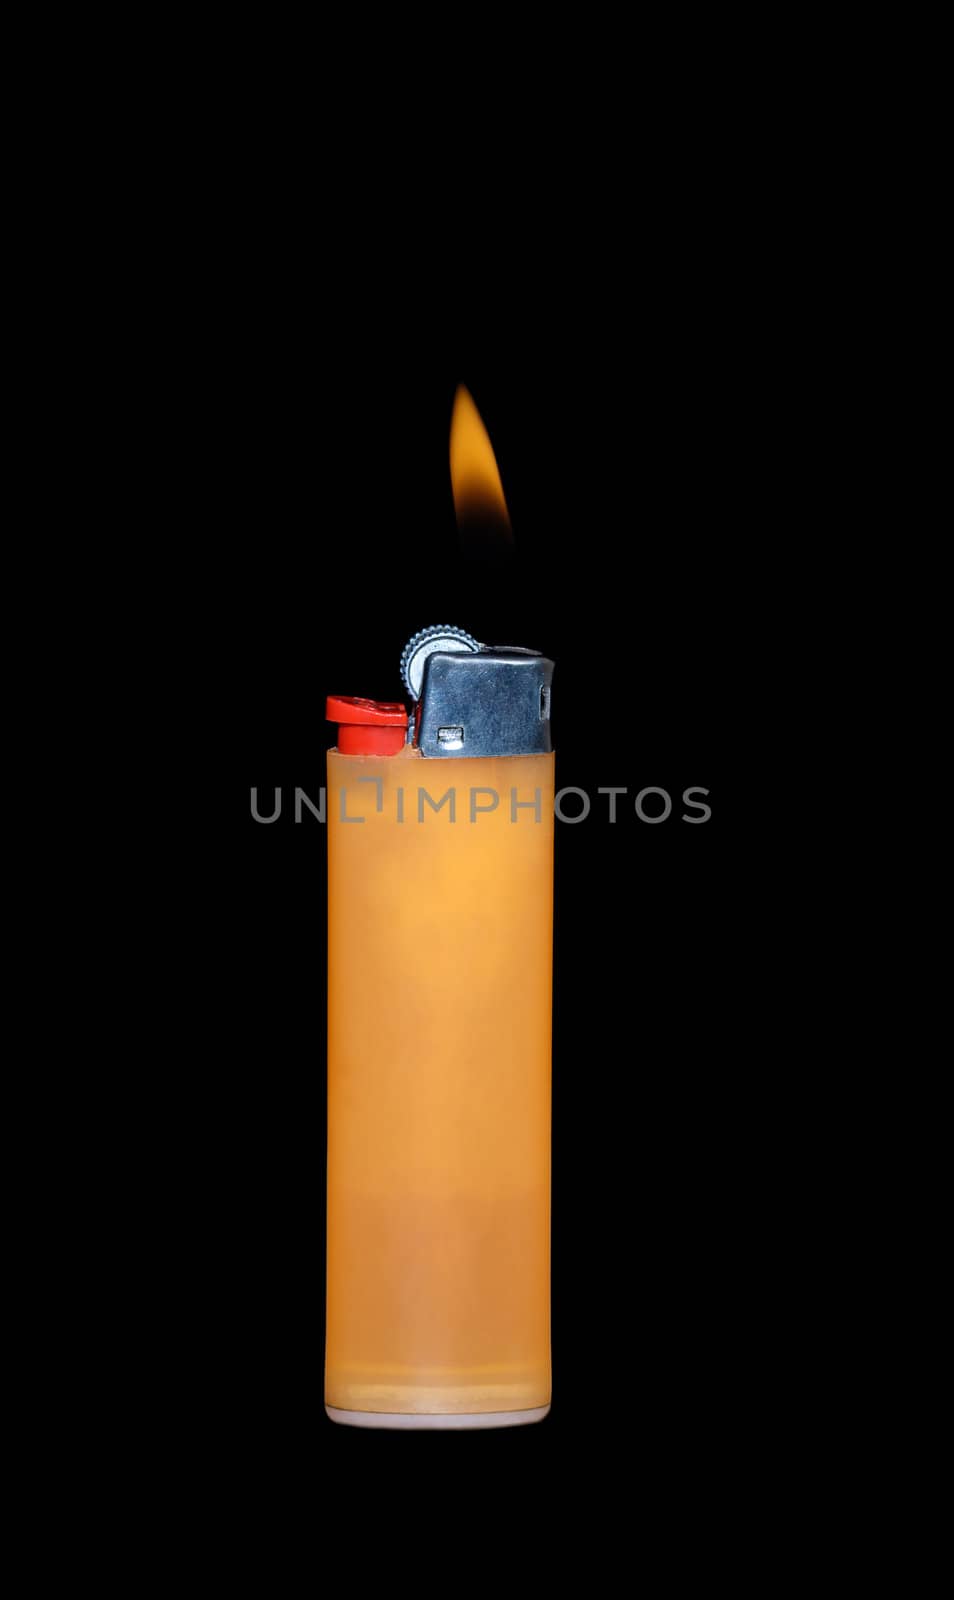 Lighter with burning flame. On black background.